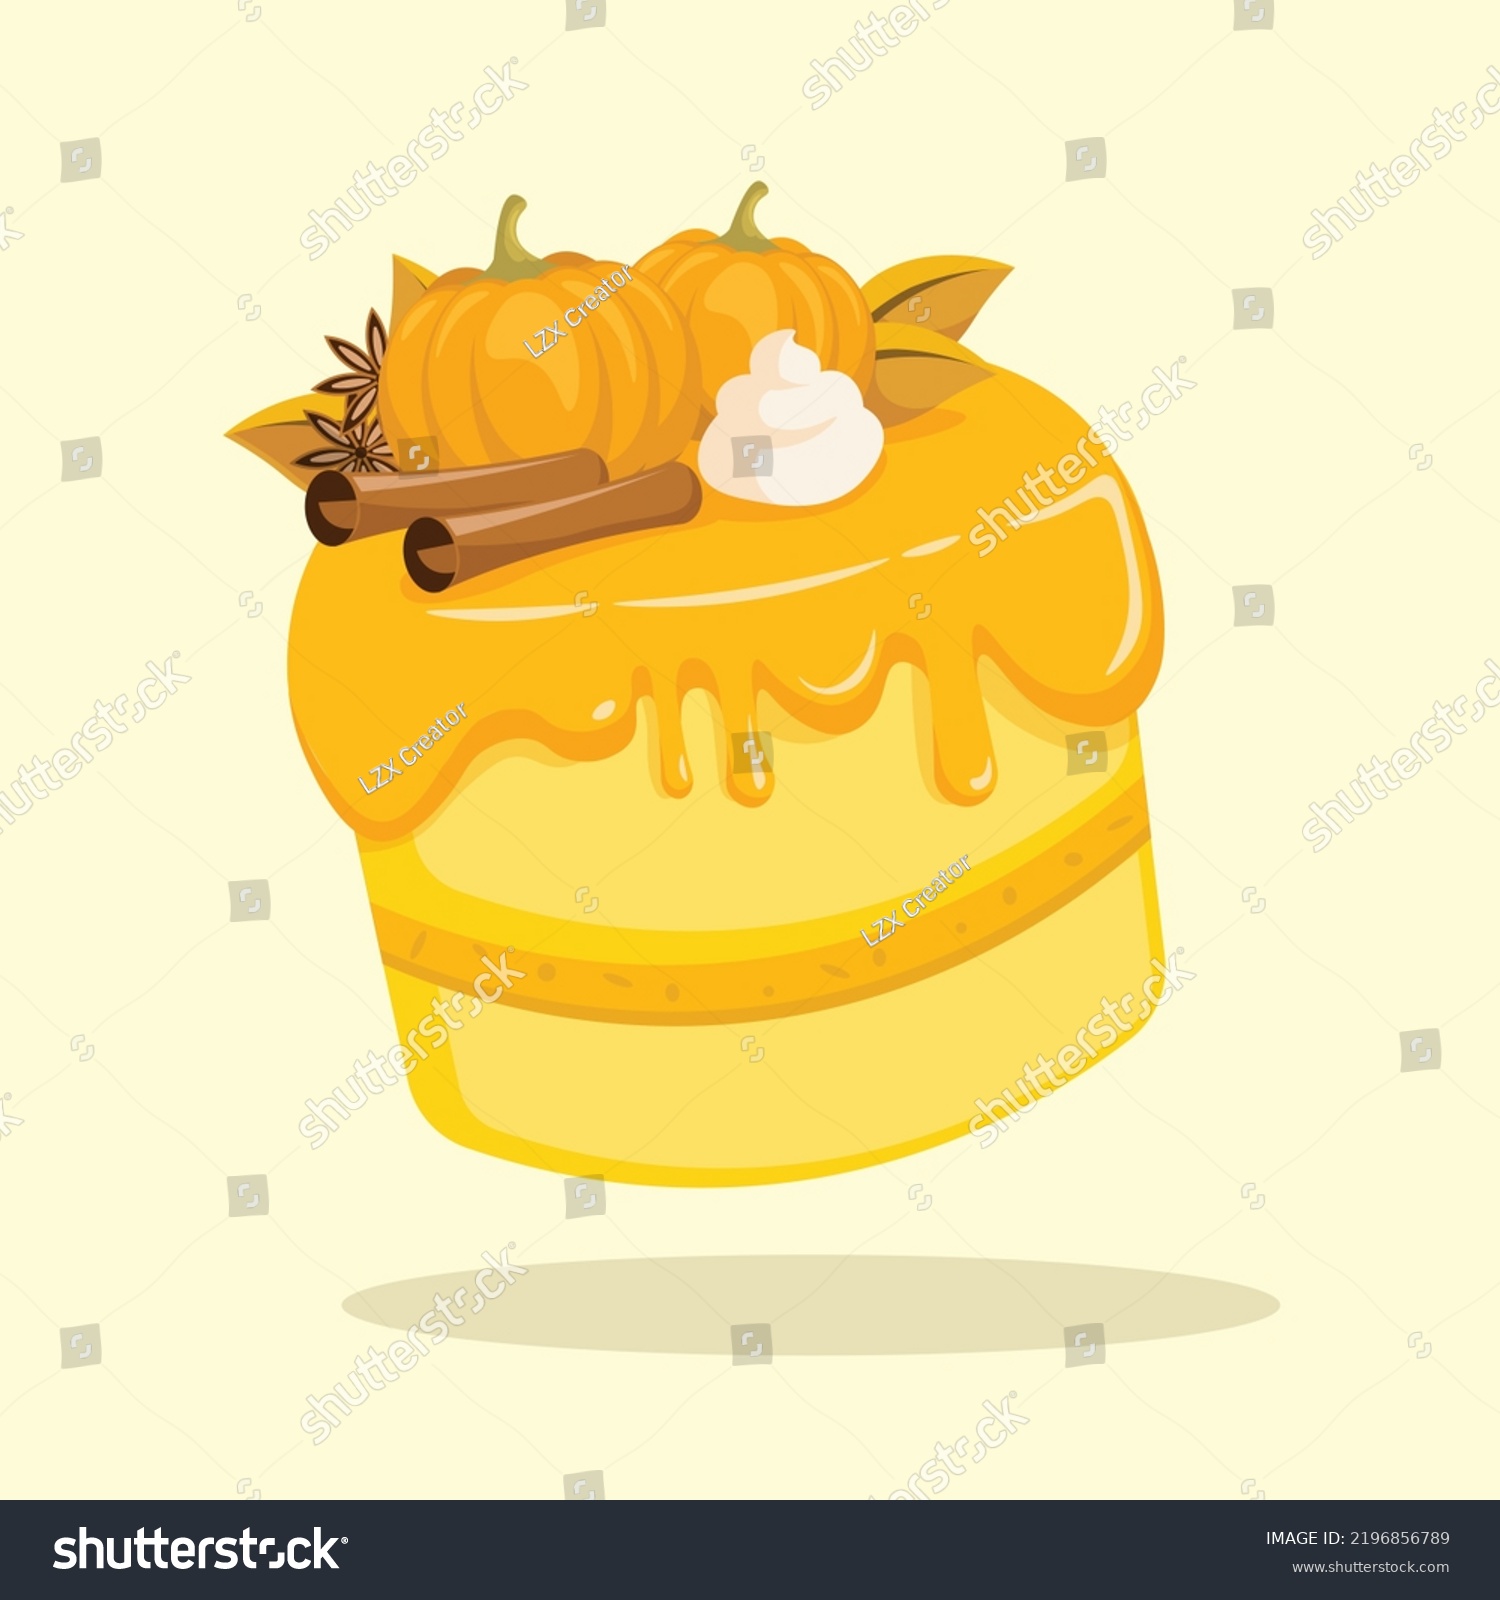 Big Pumpkin Cake Pumpkin Cream Cinnamon Stock Vector Royalty Free 2196856789 Shutterstock 